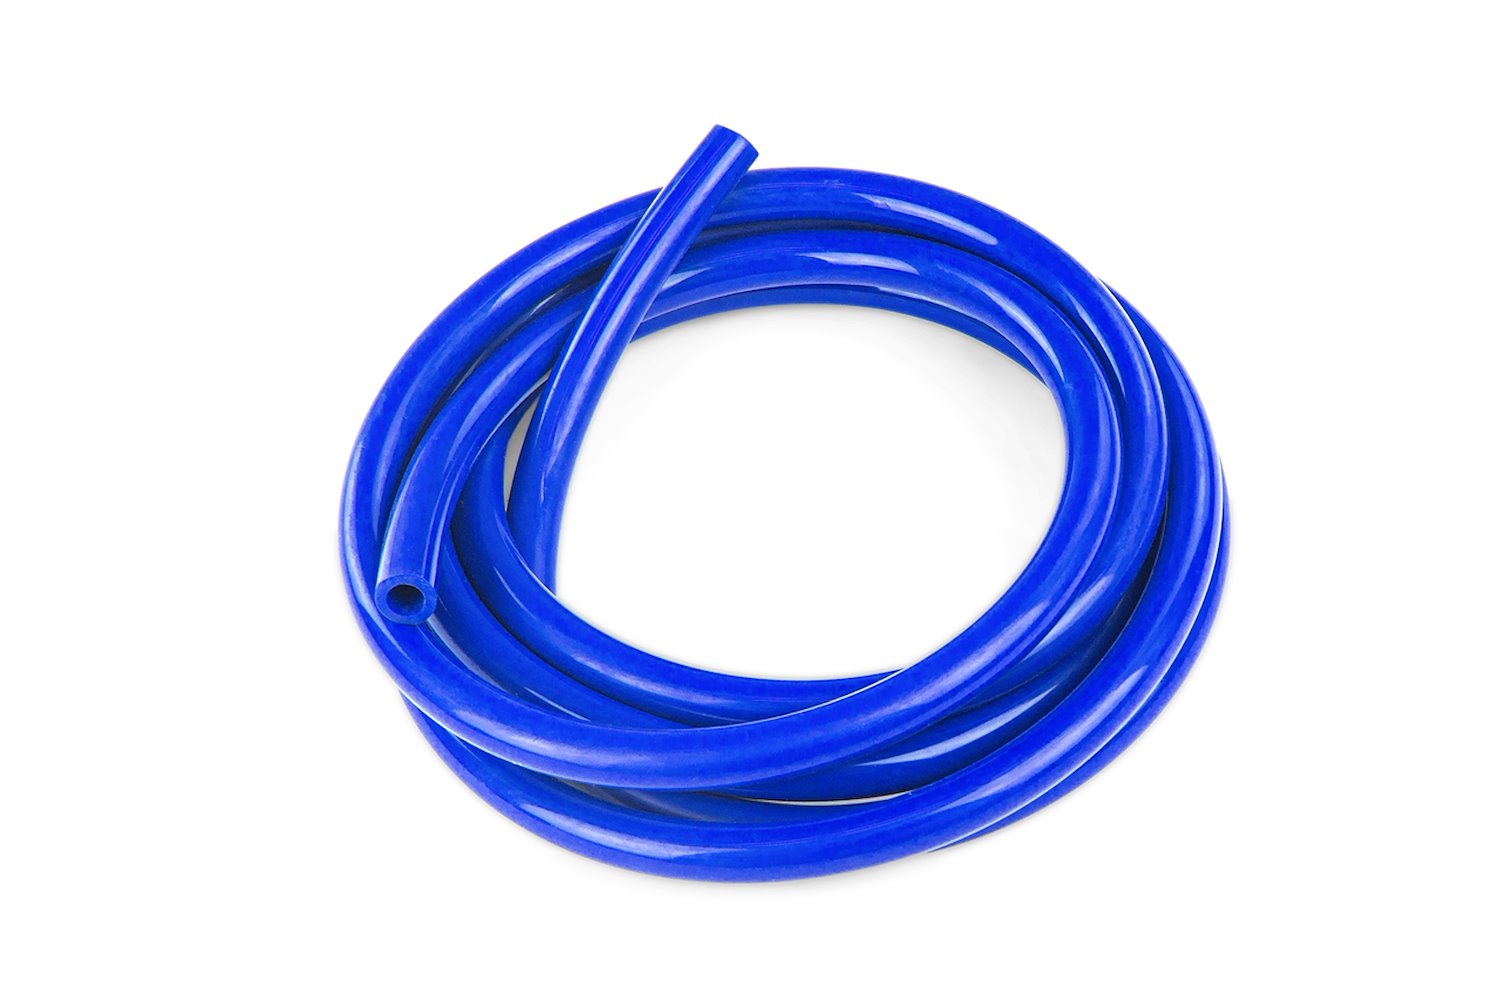 HTSVH2-BLUEx5 High-Temperature Silicone Vacuum Hose Tubing, 5/64 in. ID, 5 ft. Roll, Blue